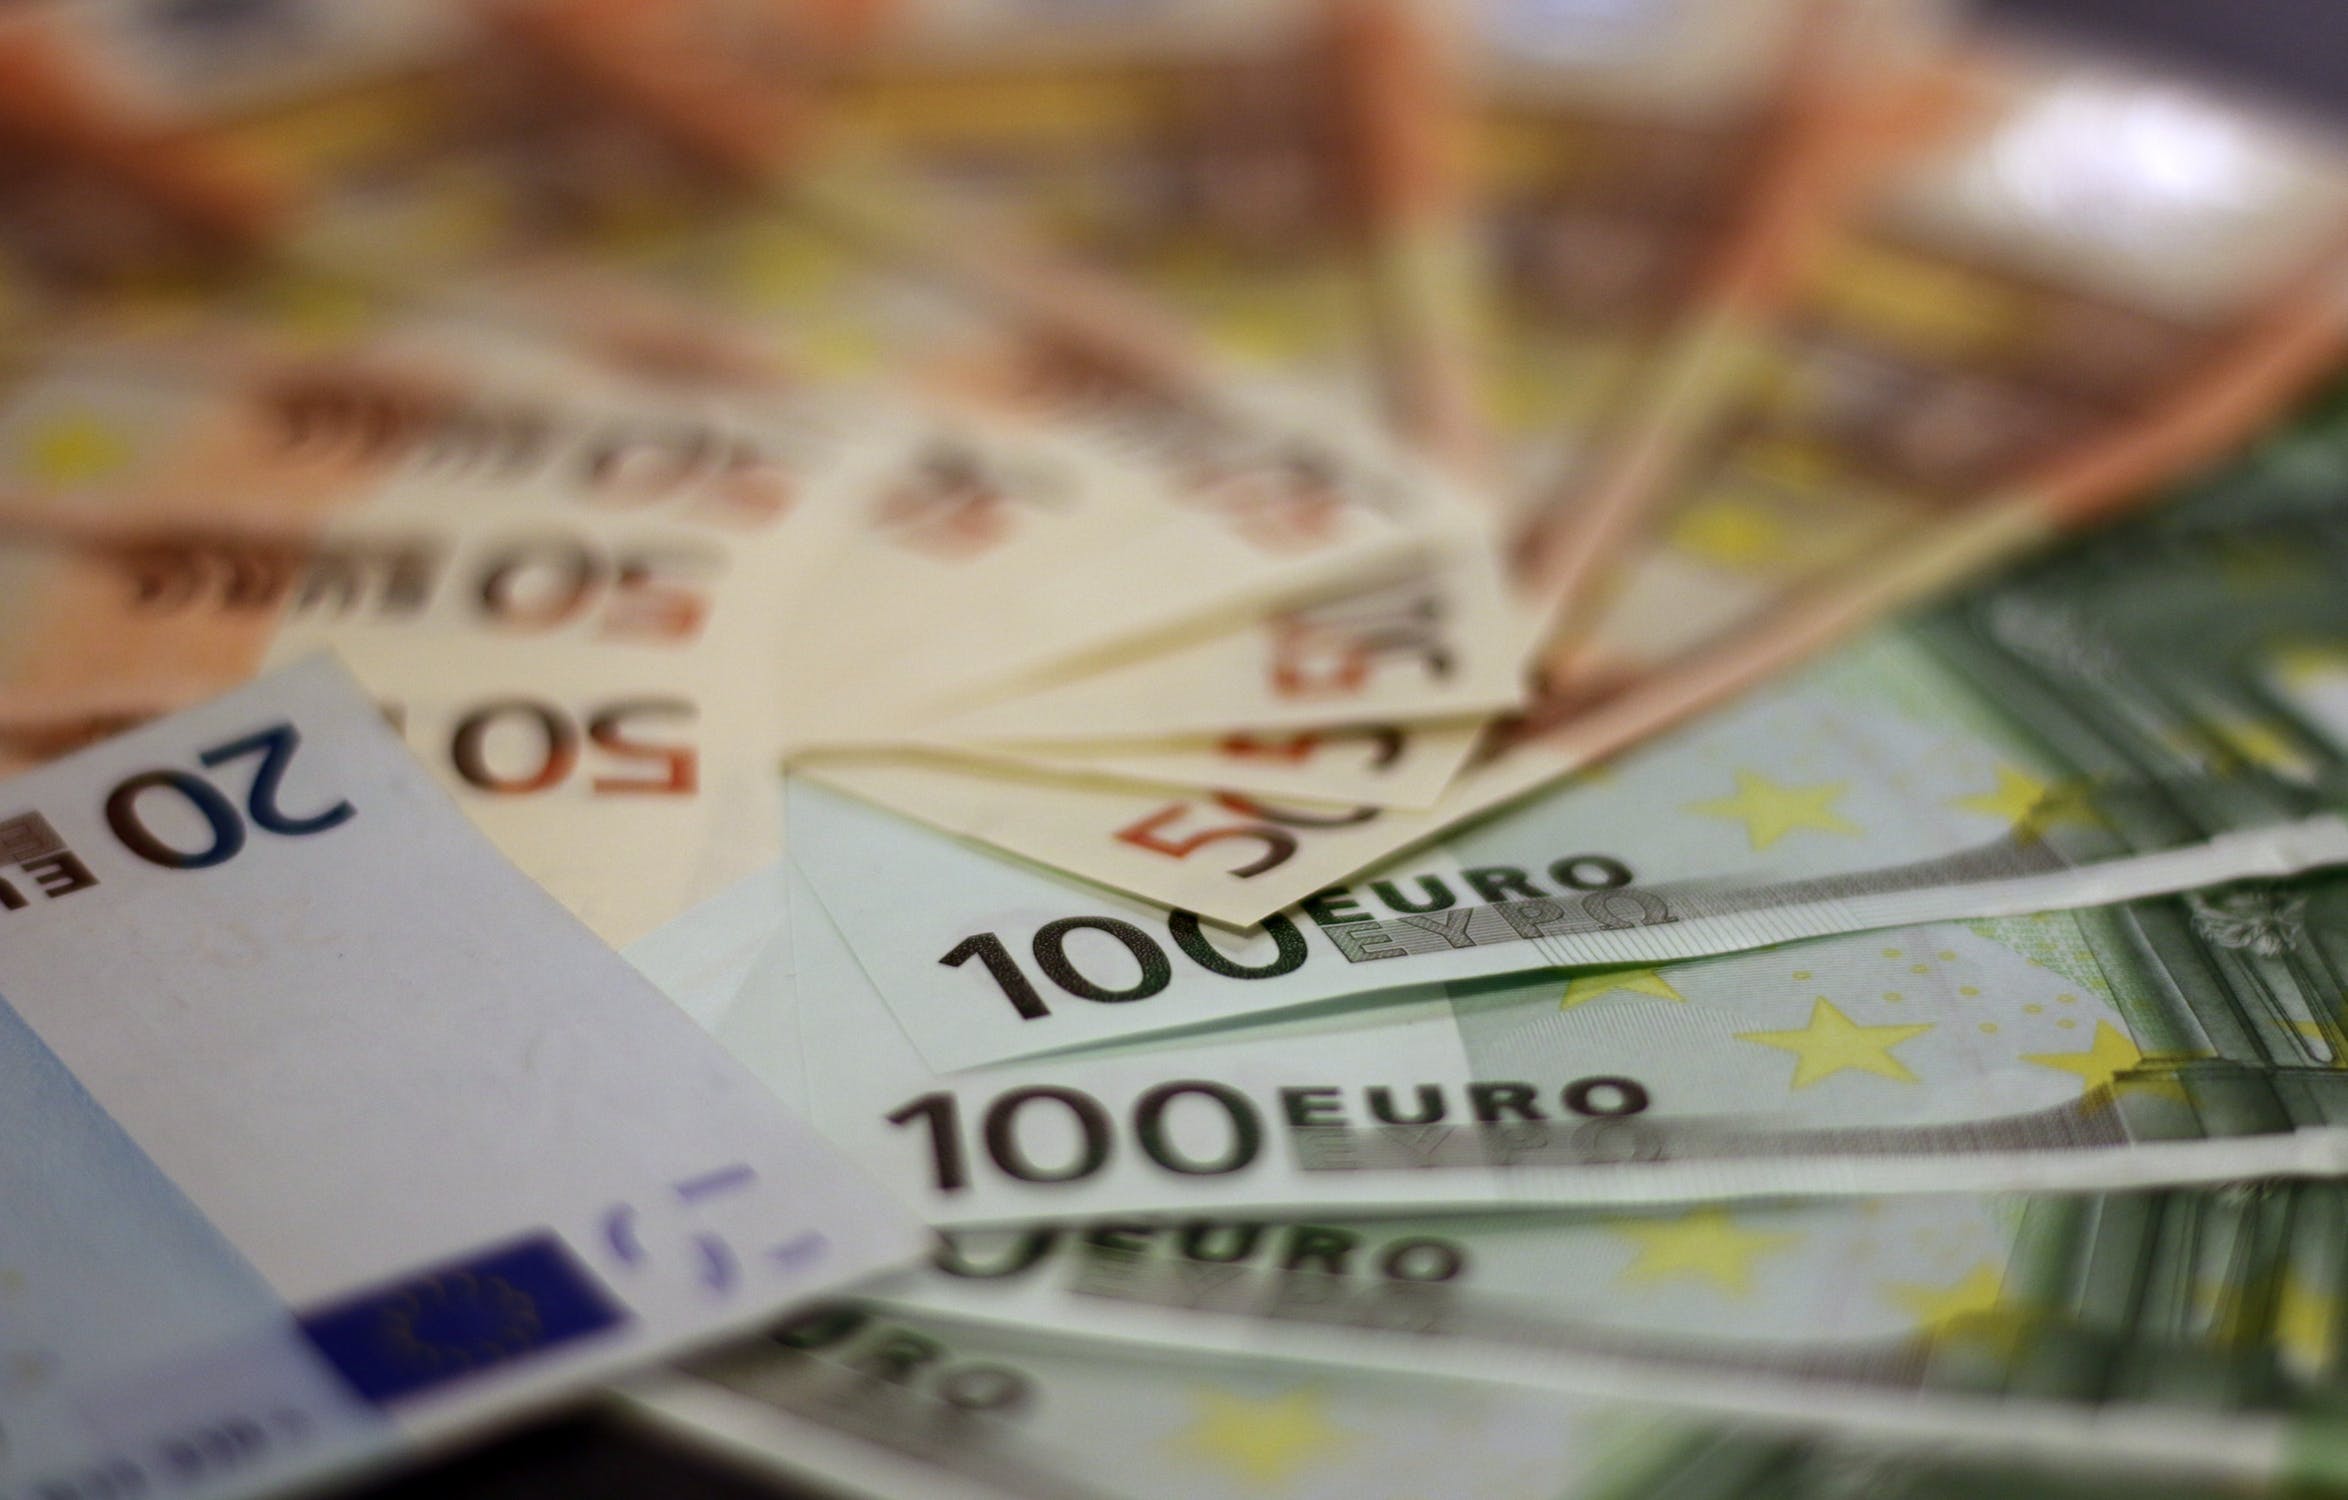 Euro bank notes. Photo: Pixabay/Pexels